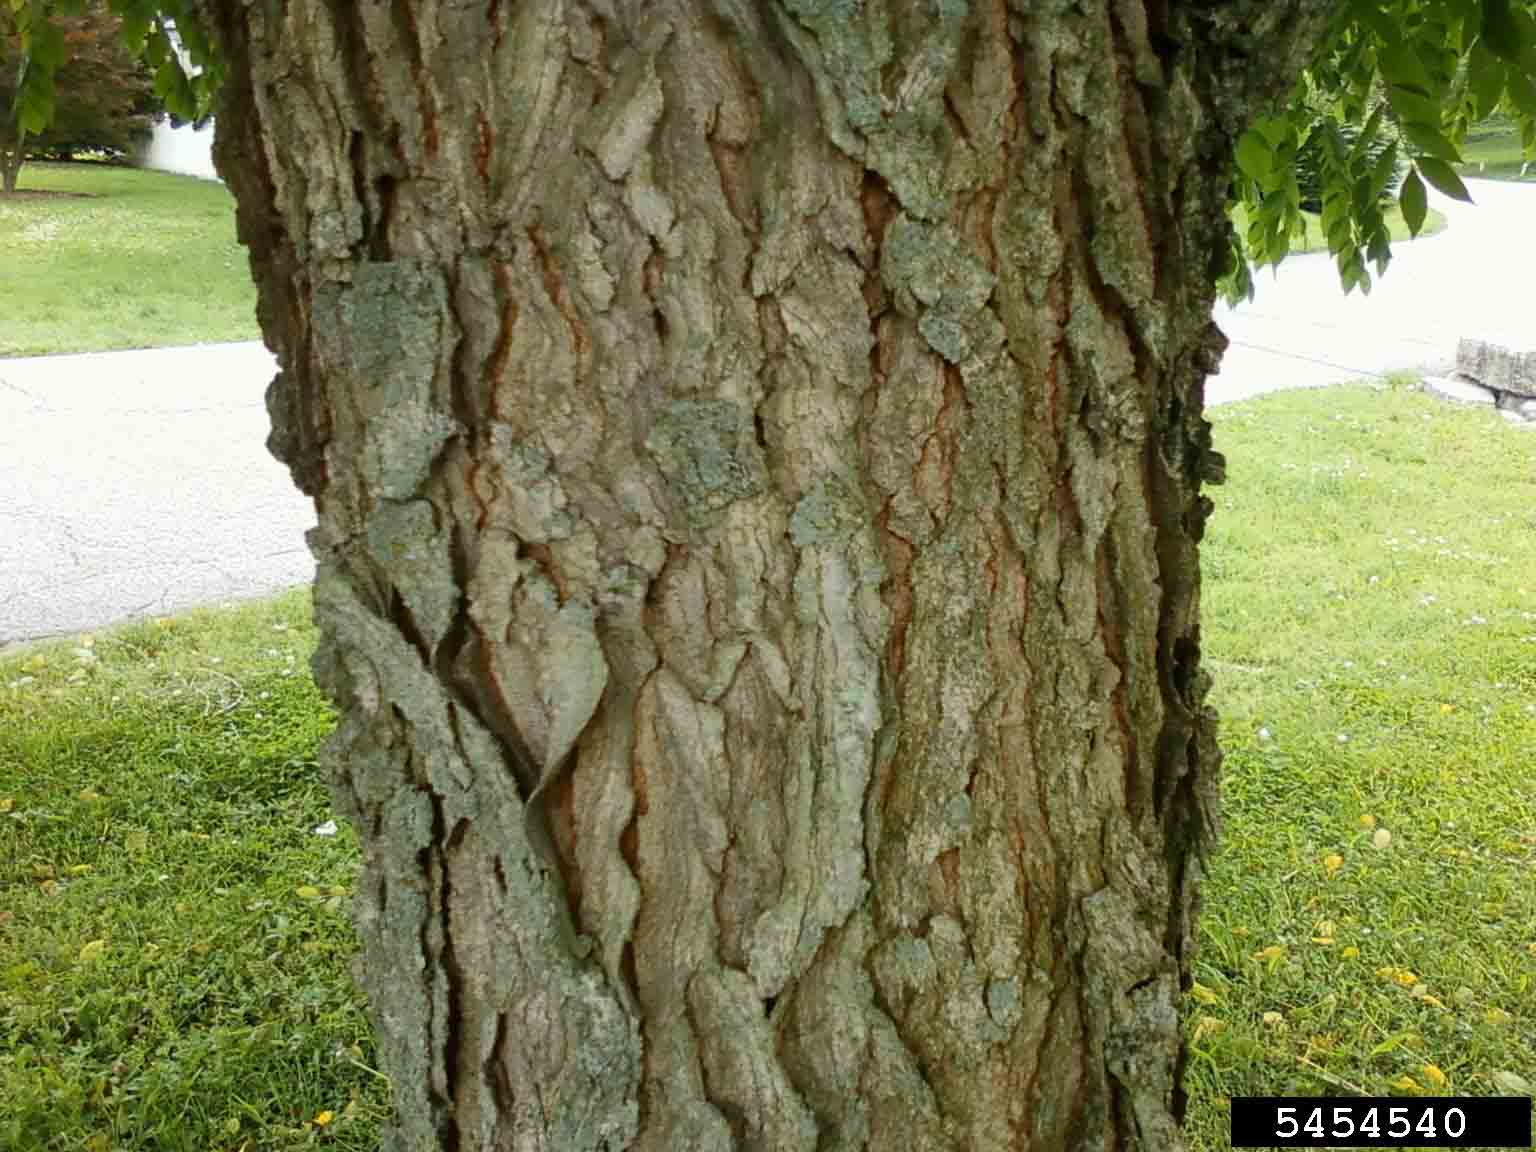 Kentucky Coffee-Tree bark